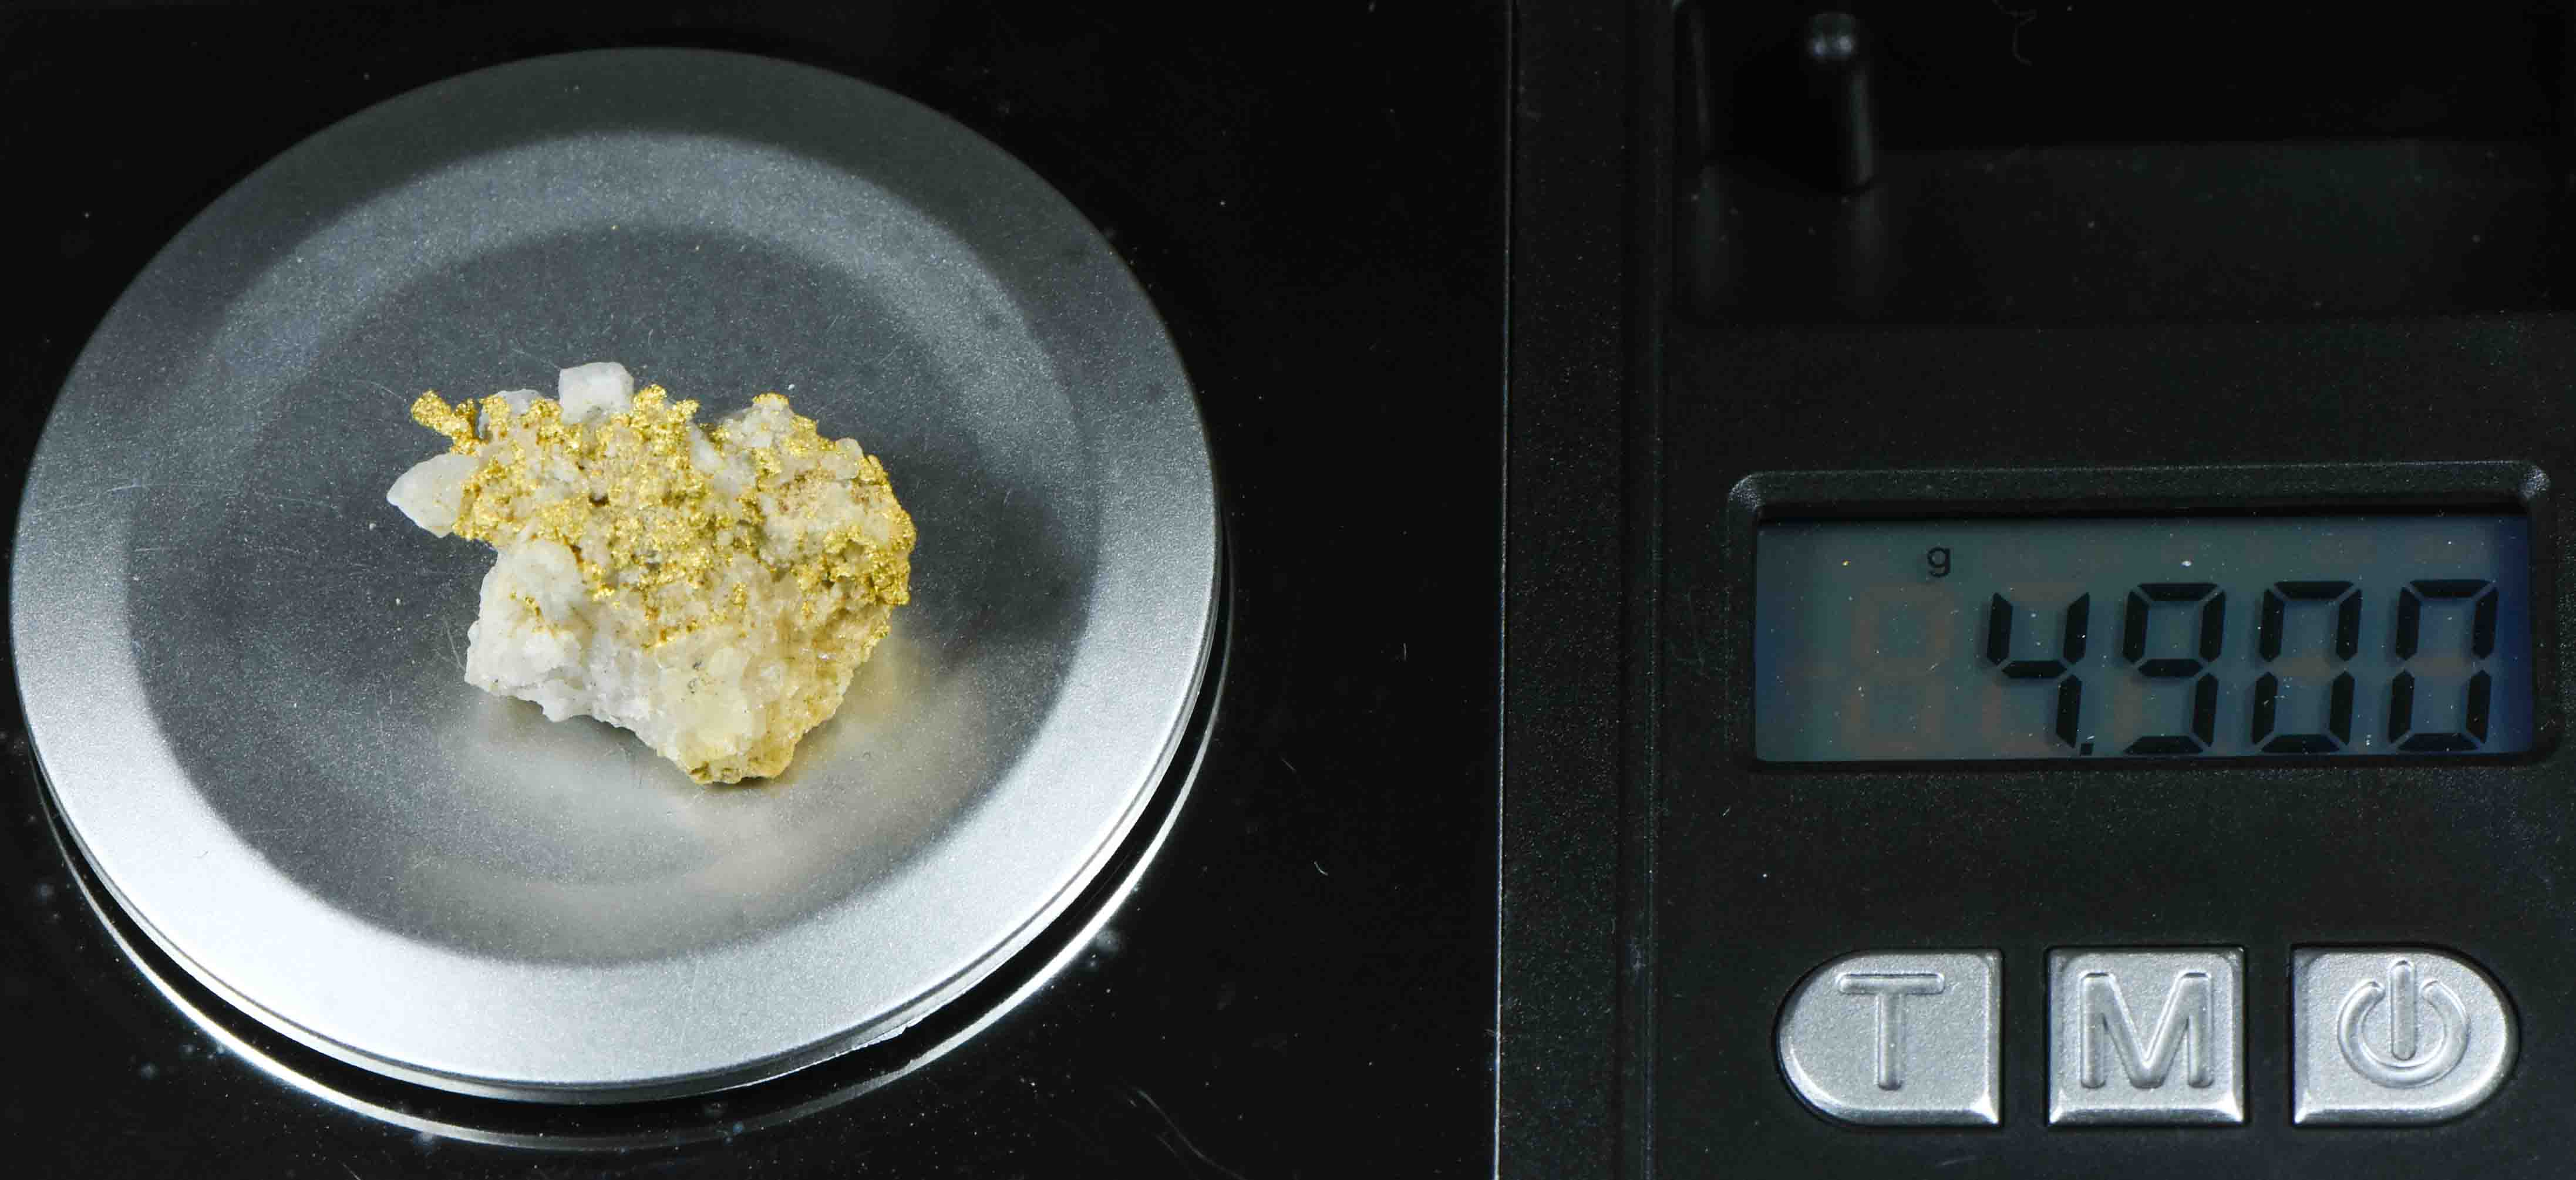 #OM-50 Crystalline Gold Nugget Specimen 4.90 Grams Oriental Mine Sierra County California Rare